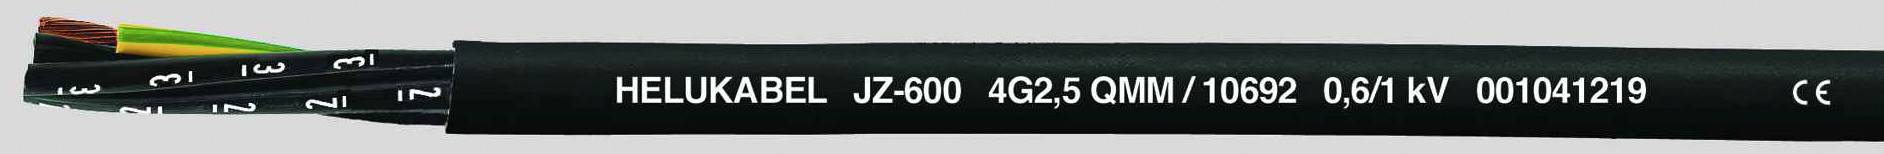 HELUKABEL JZ-600 Steuerleitung 5 G 1.50 mm² Schwarz 10661-1000 1000 m